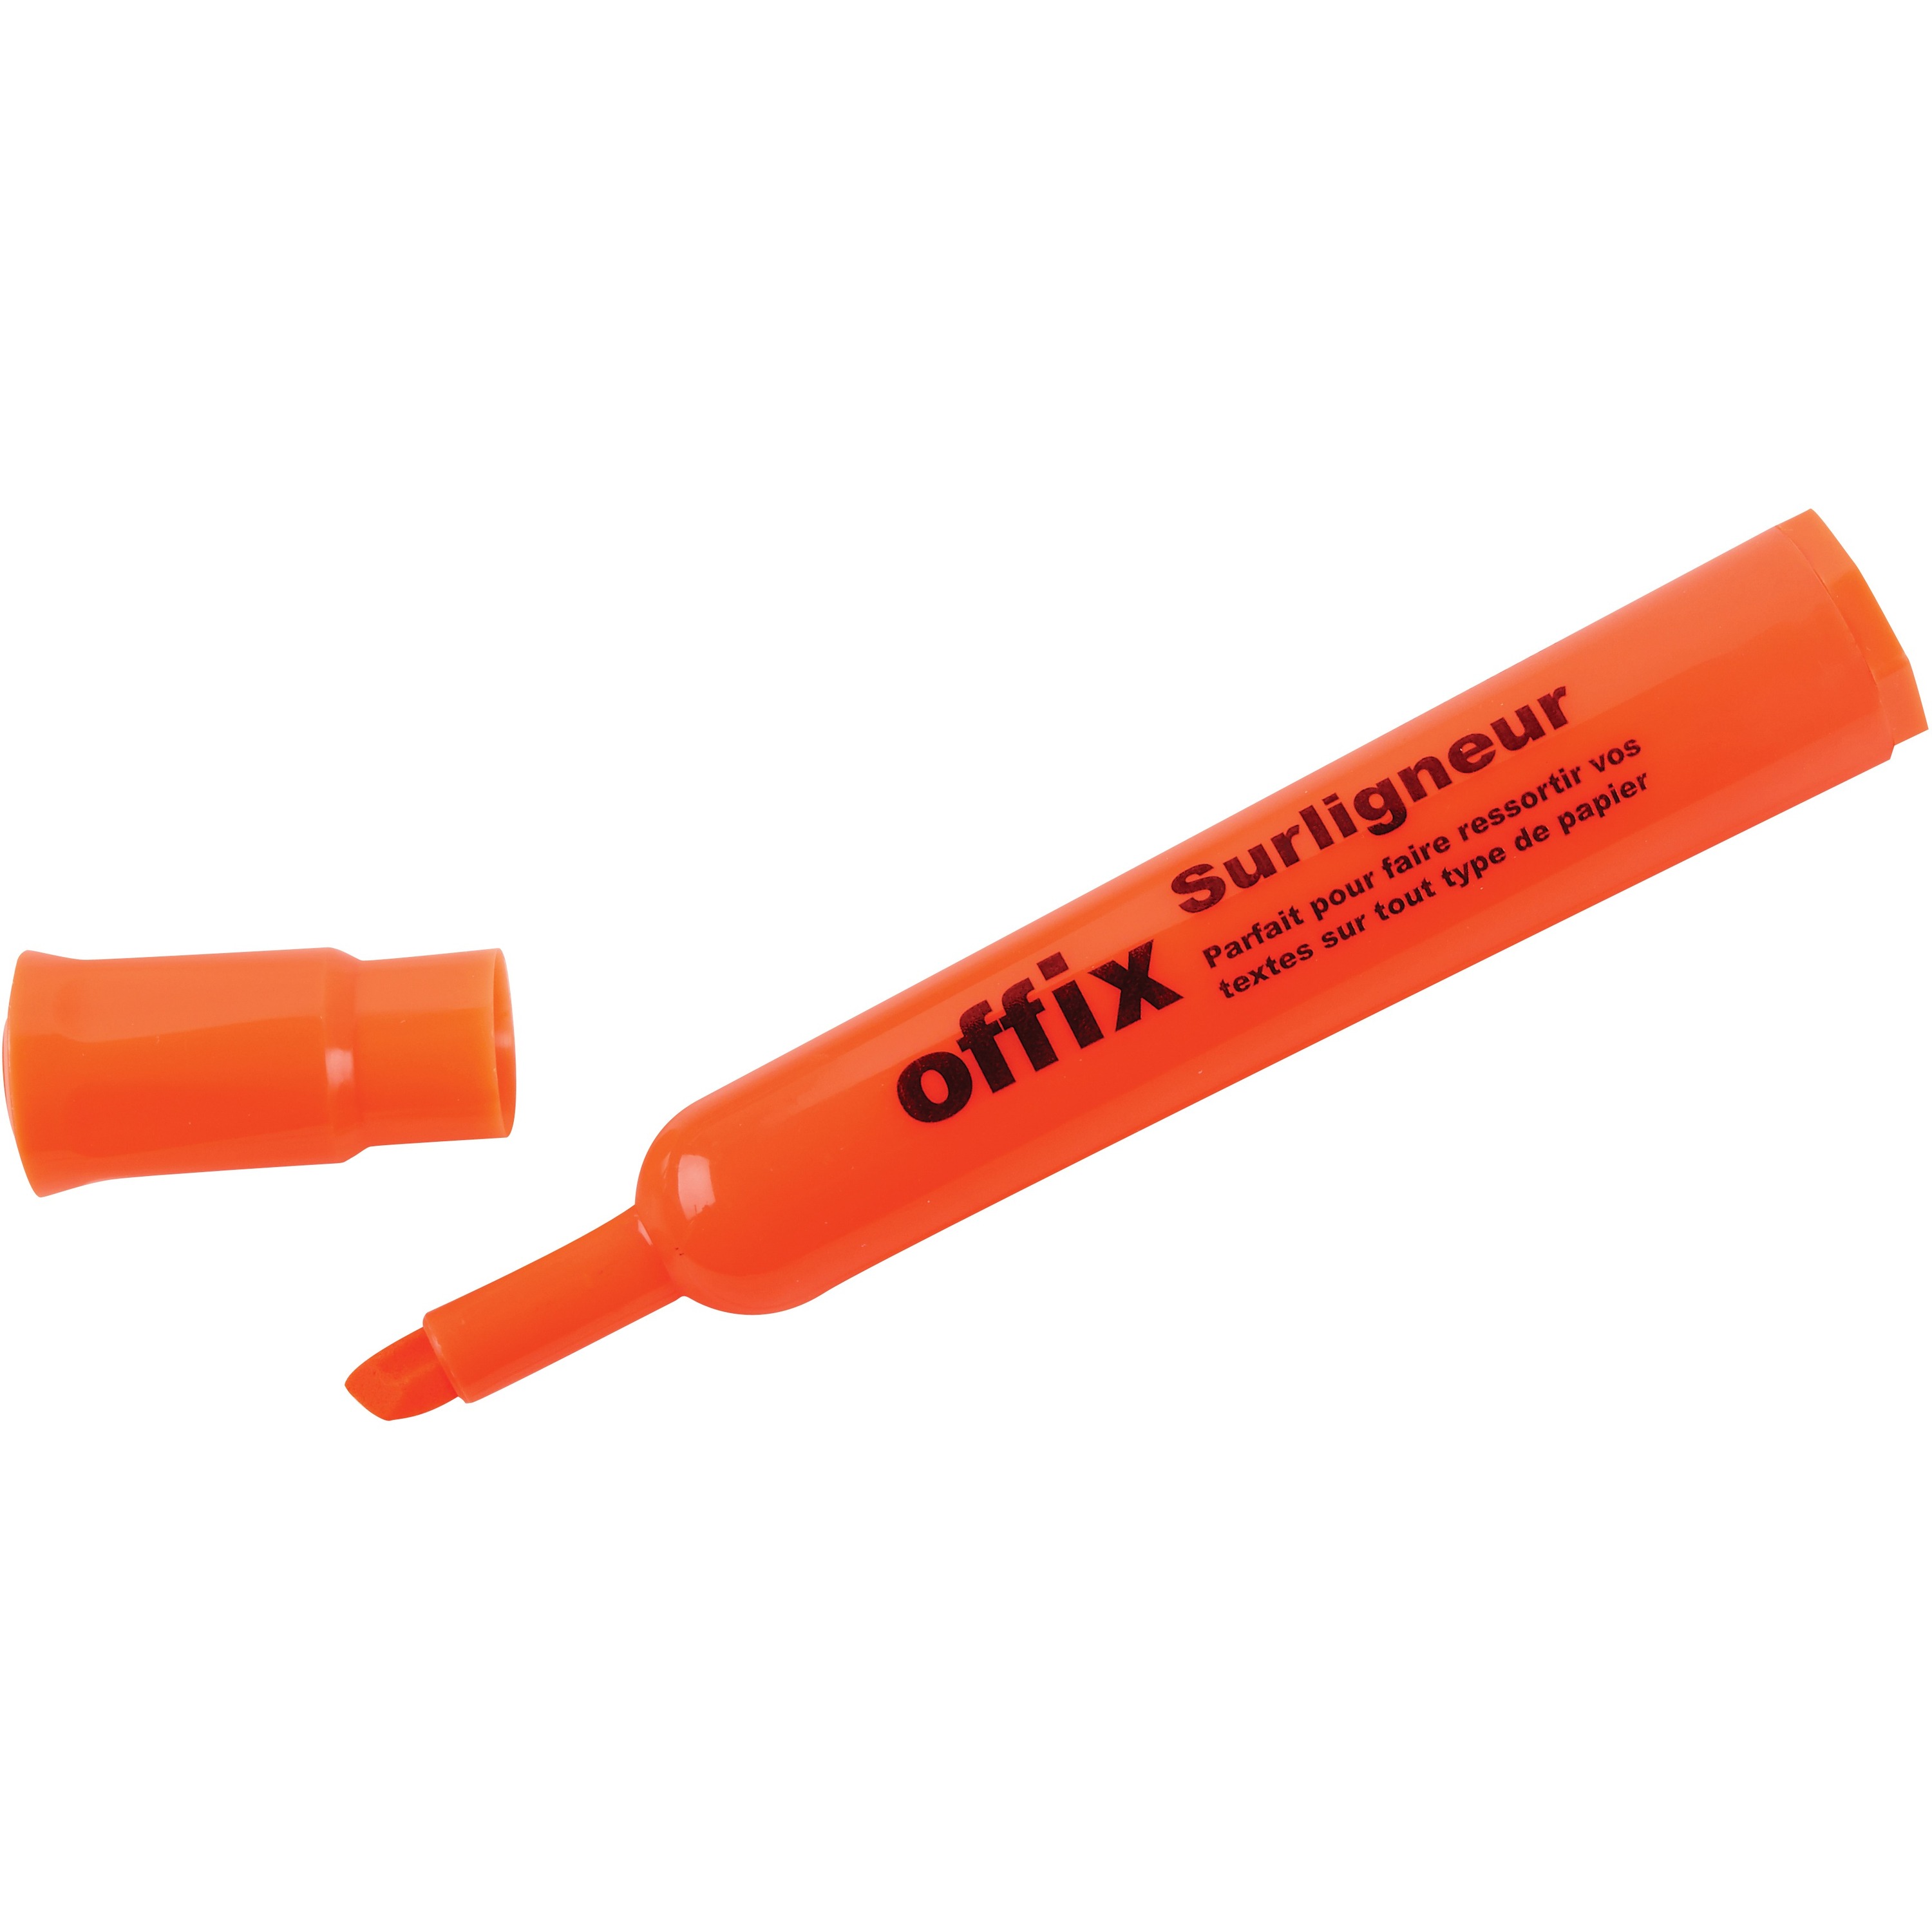 Offix Highlighter - Chisel Marker Point Style - Orange - 1 Dozen